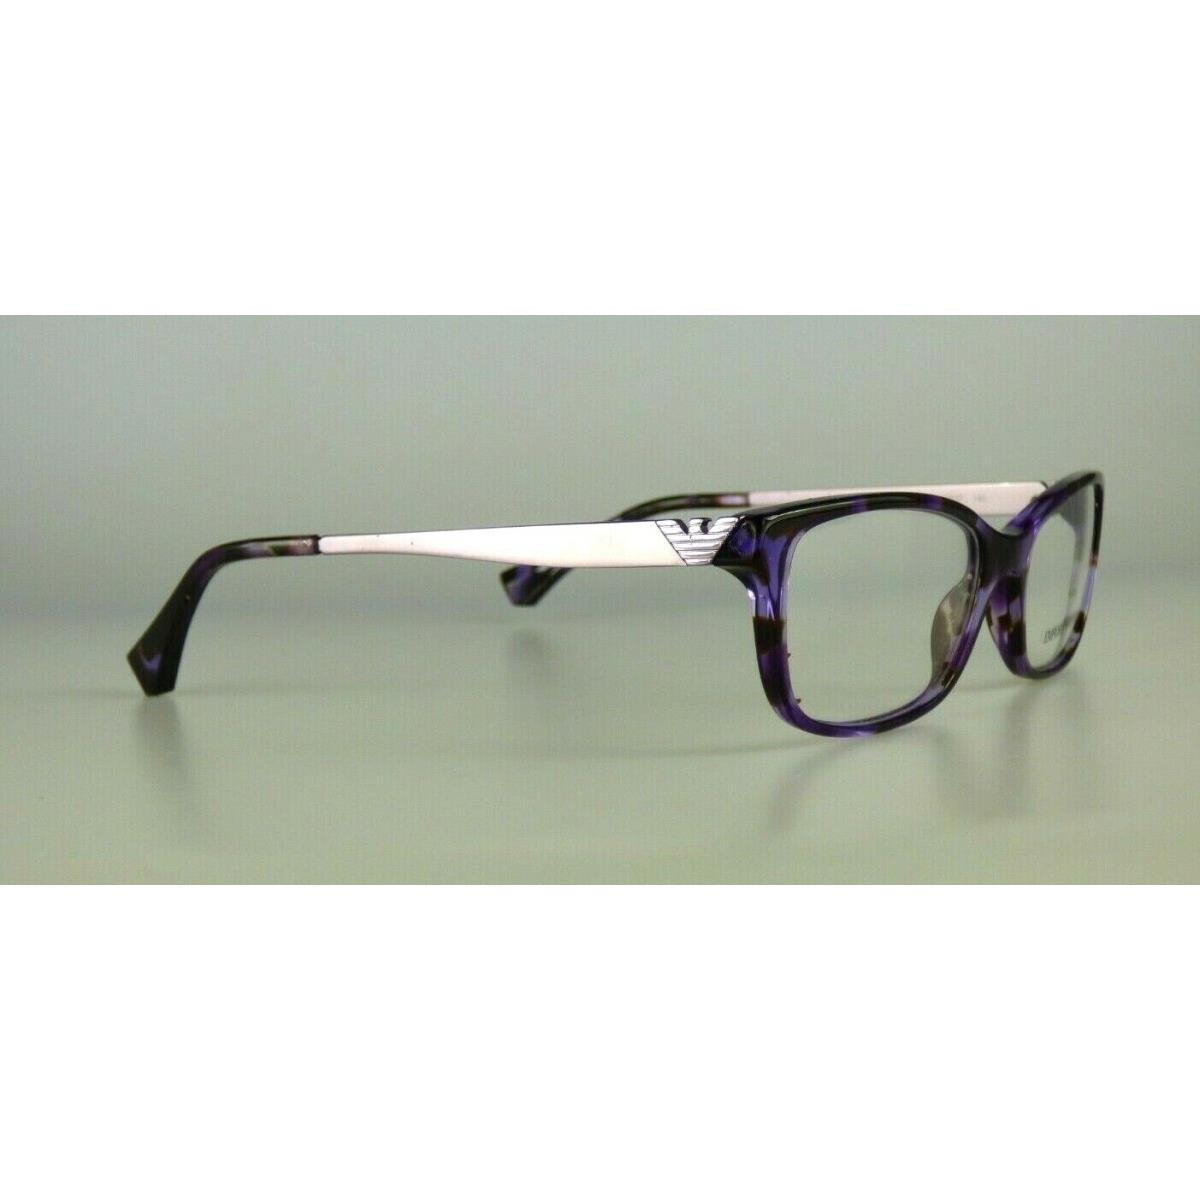 Emporio Armani eyeglasses  - 5226 Frame, Clear Lens 0